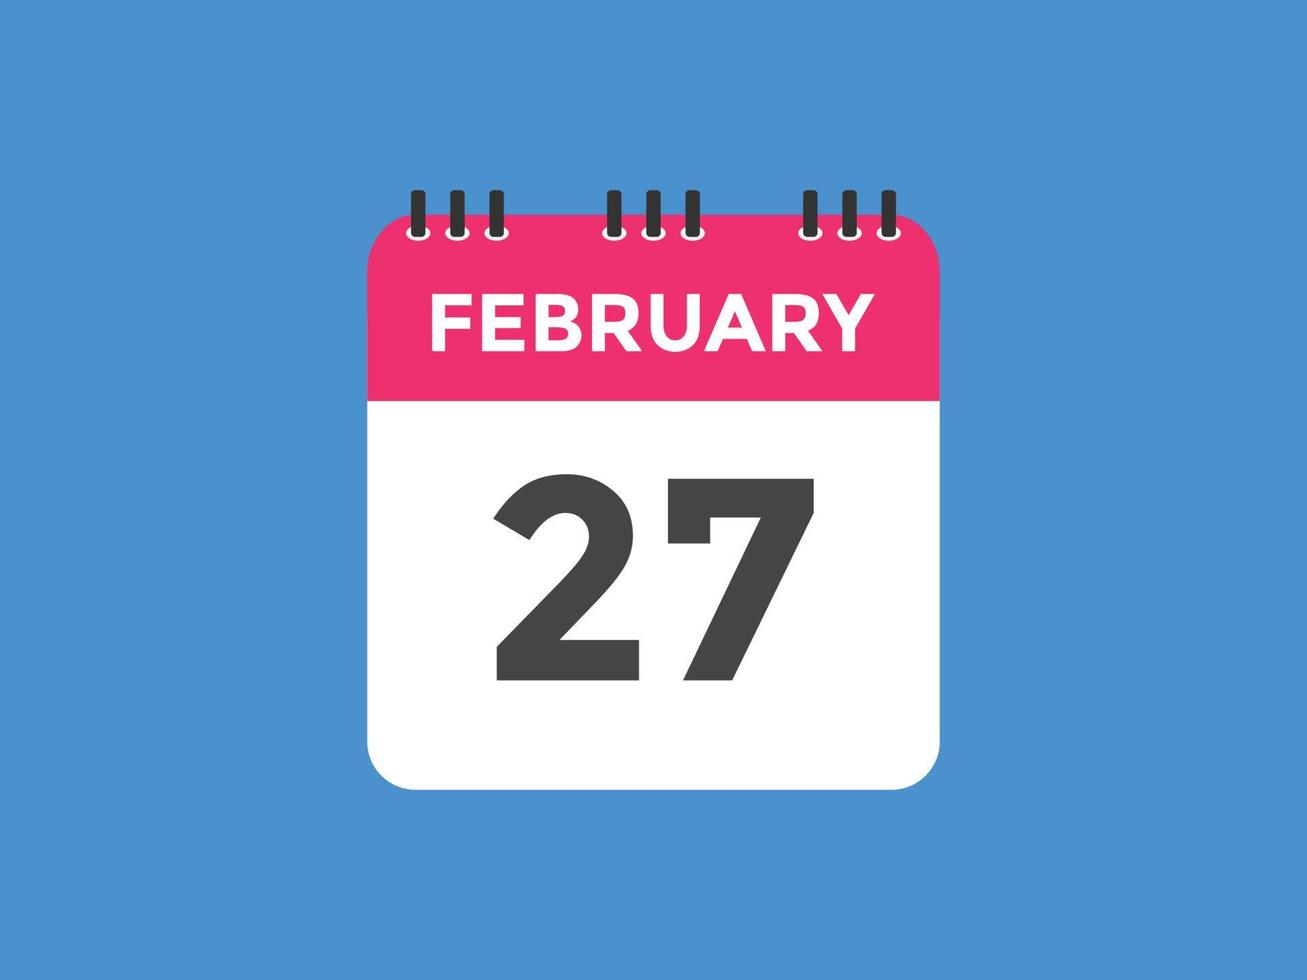 february 27 calendar reminder. 27th february daily calendar icon